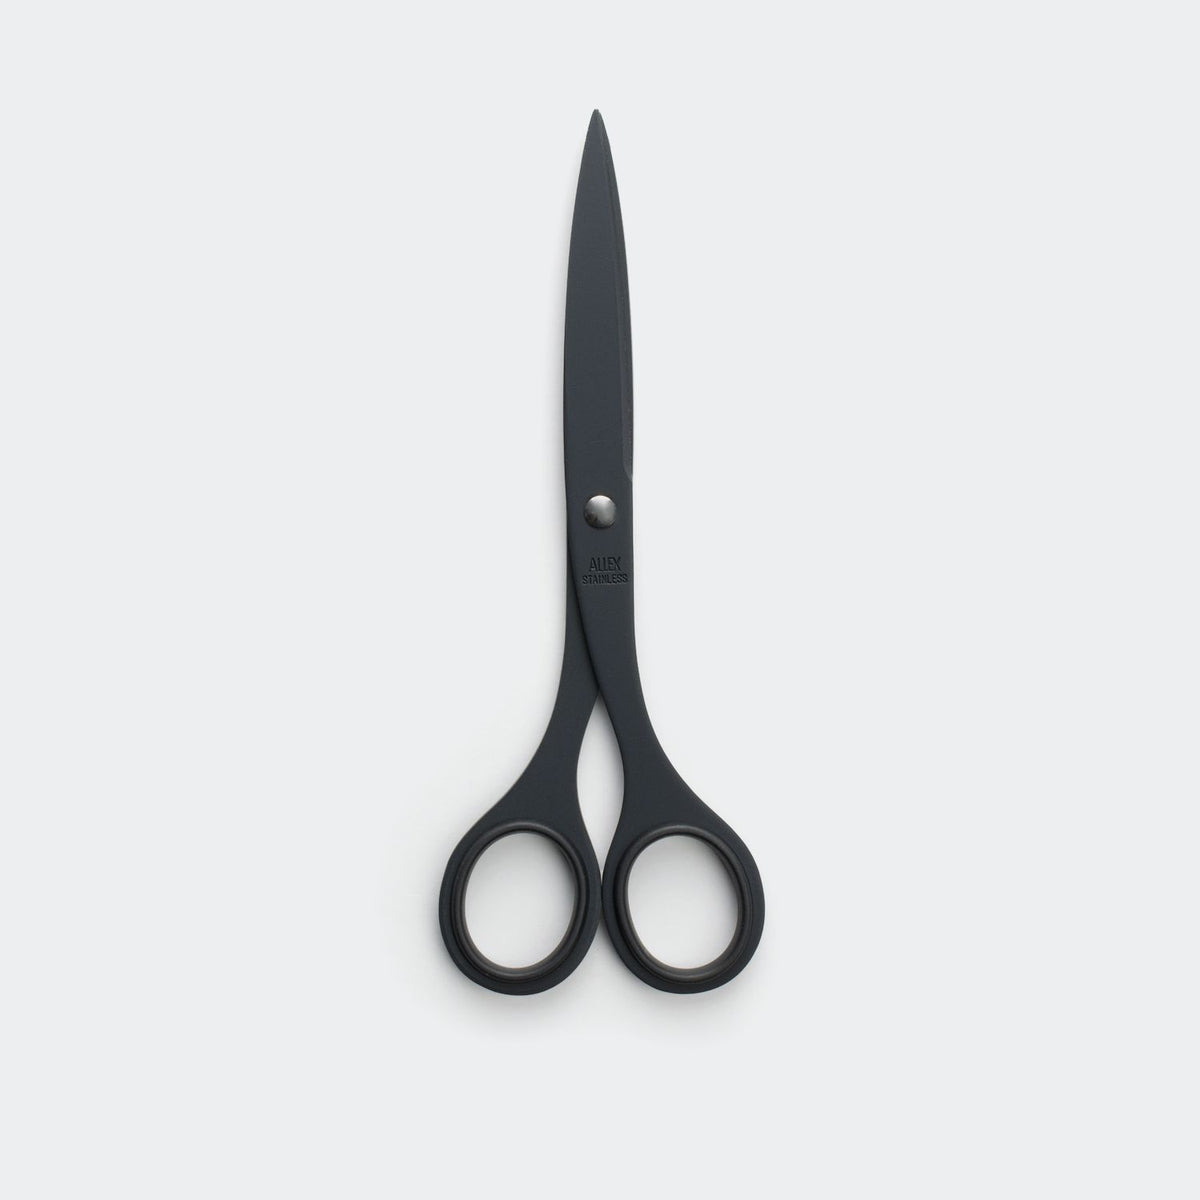 Allex All-Purpose Stainless Steel Desk Scissors — The Gentleman